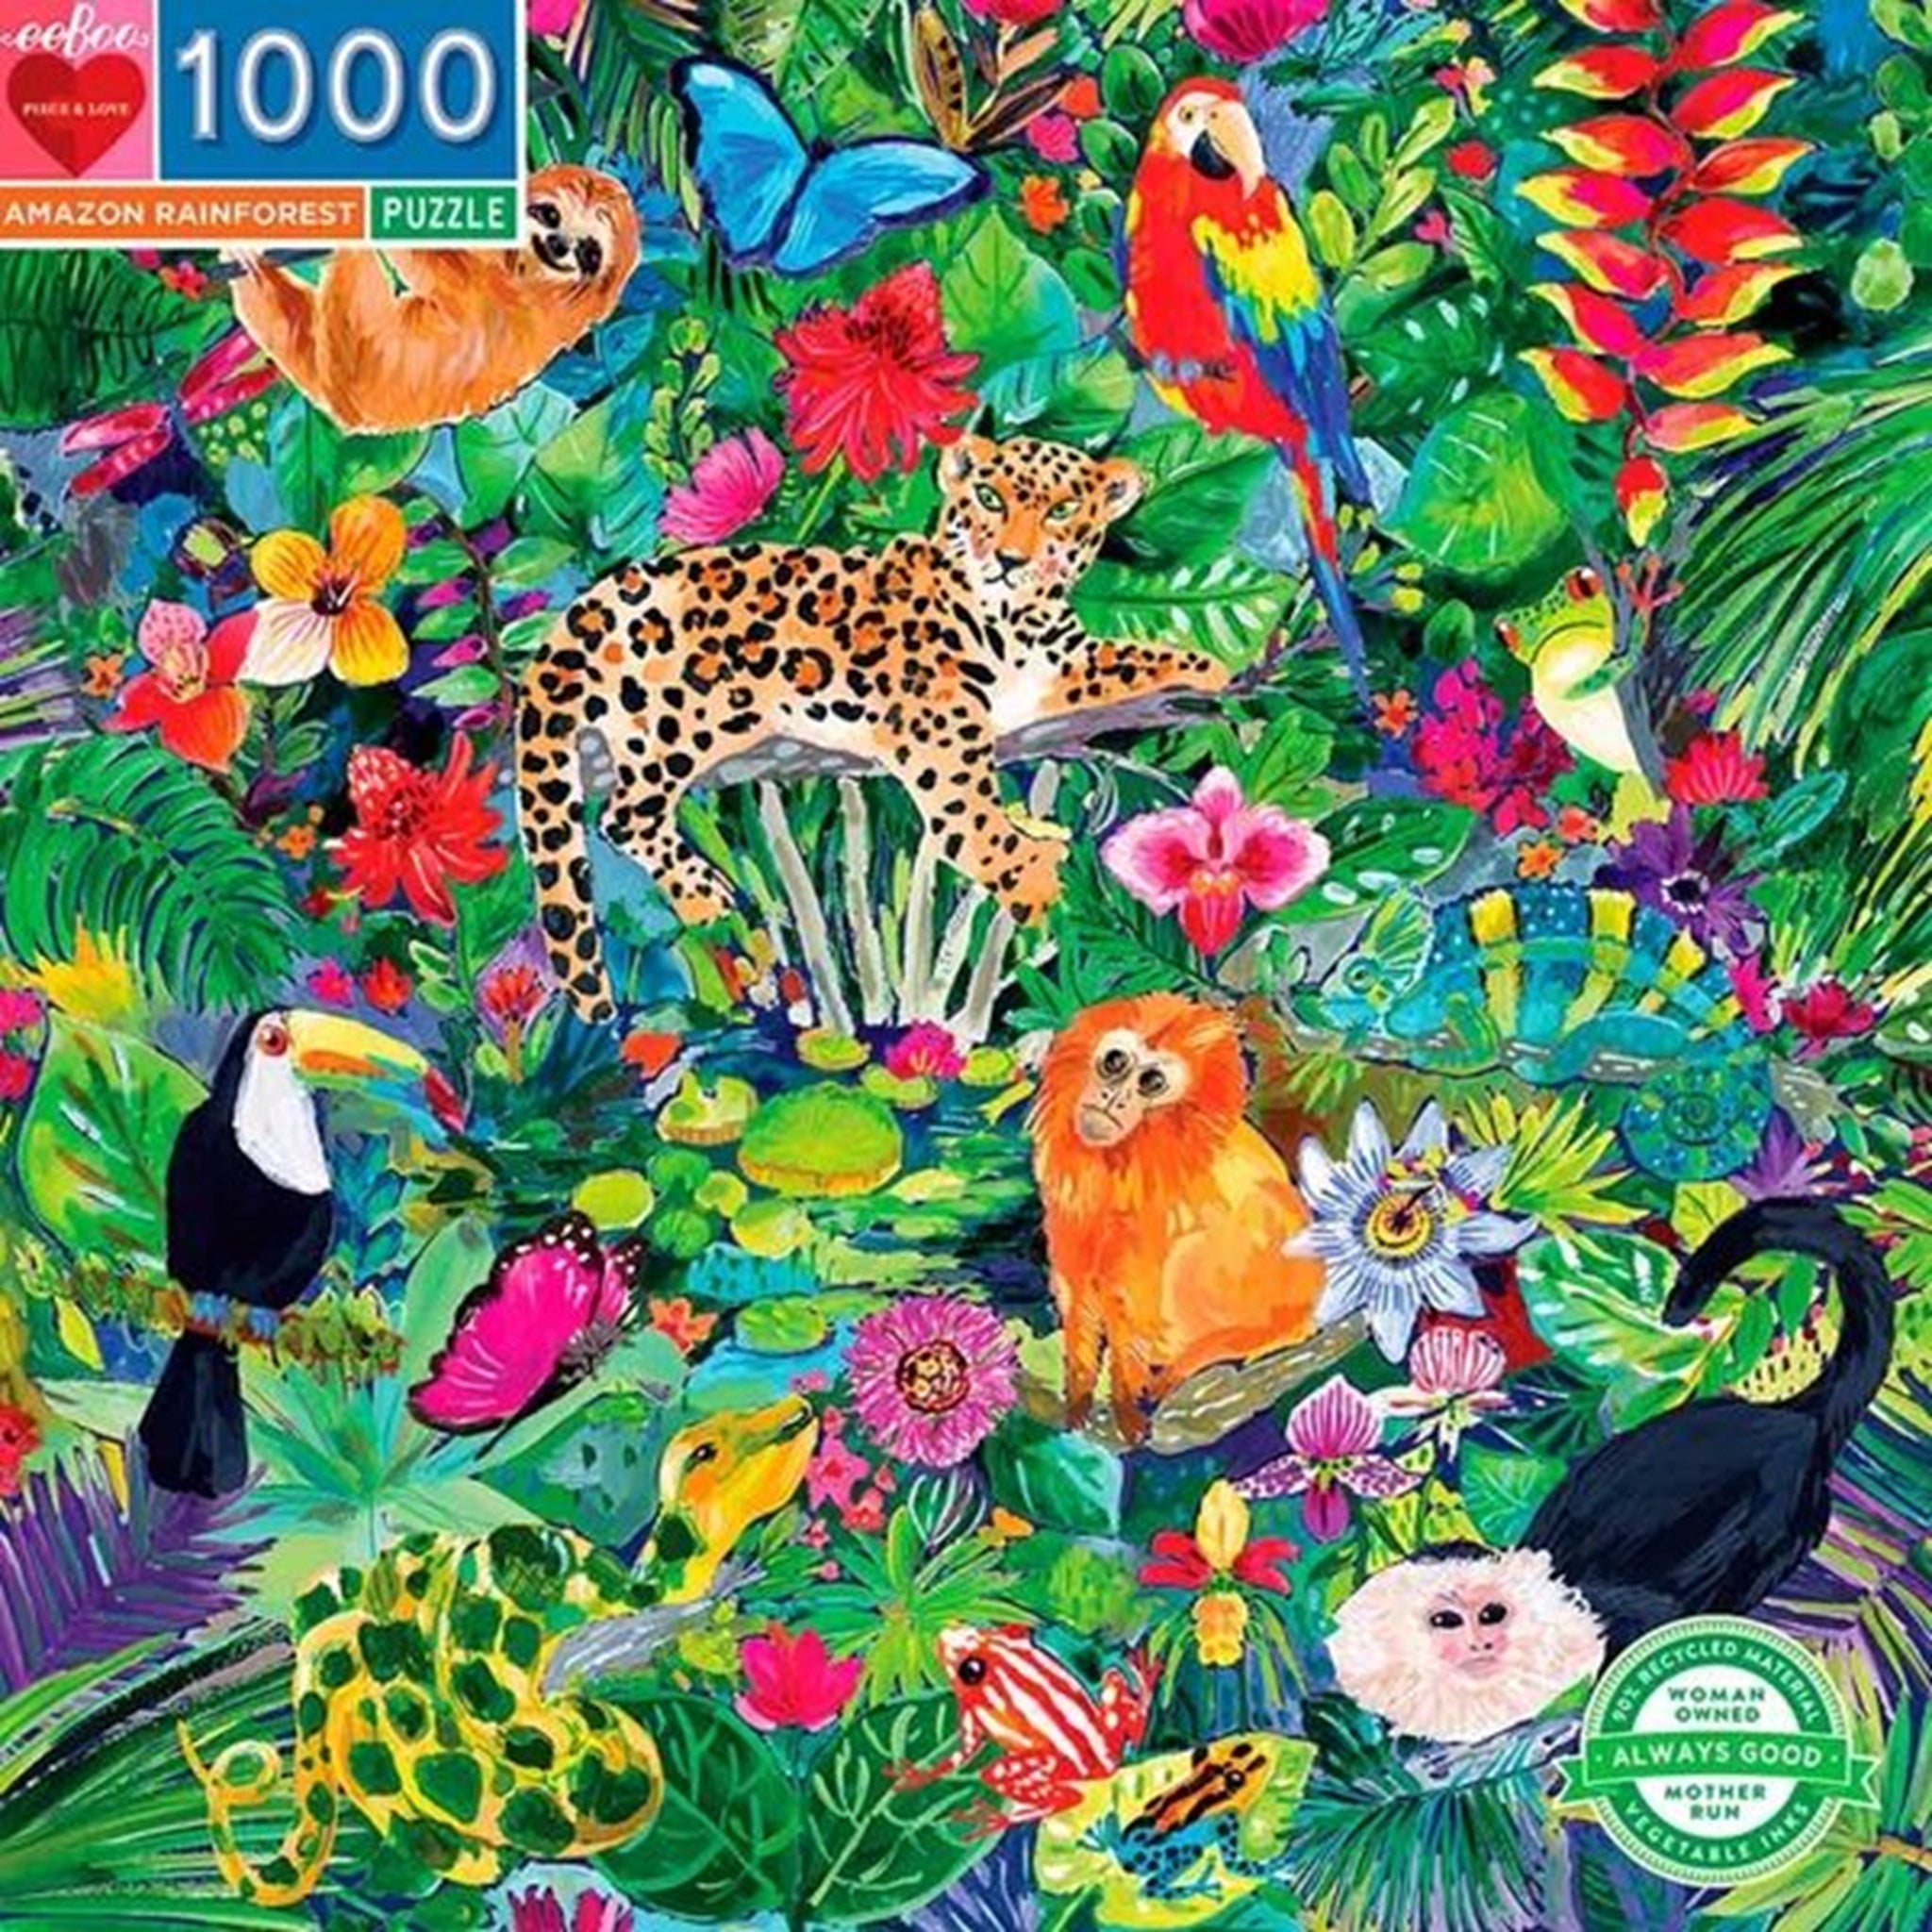 Eeboo Puzzle 1000 Pieces - Amazonas Rainforest